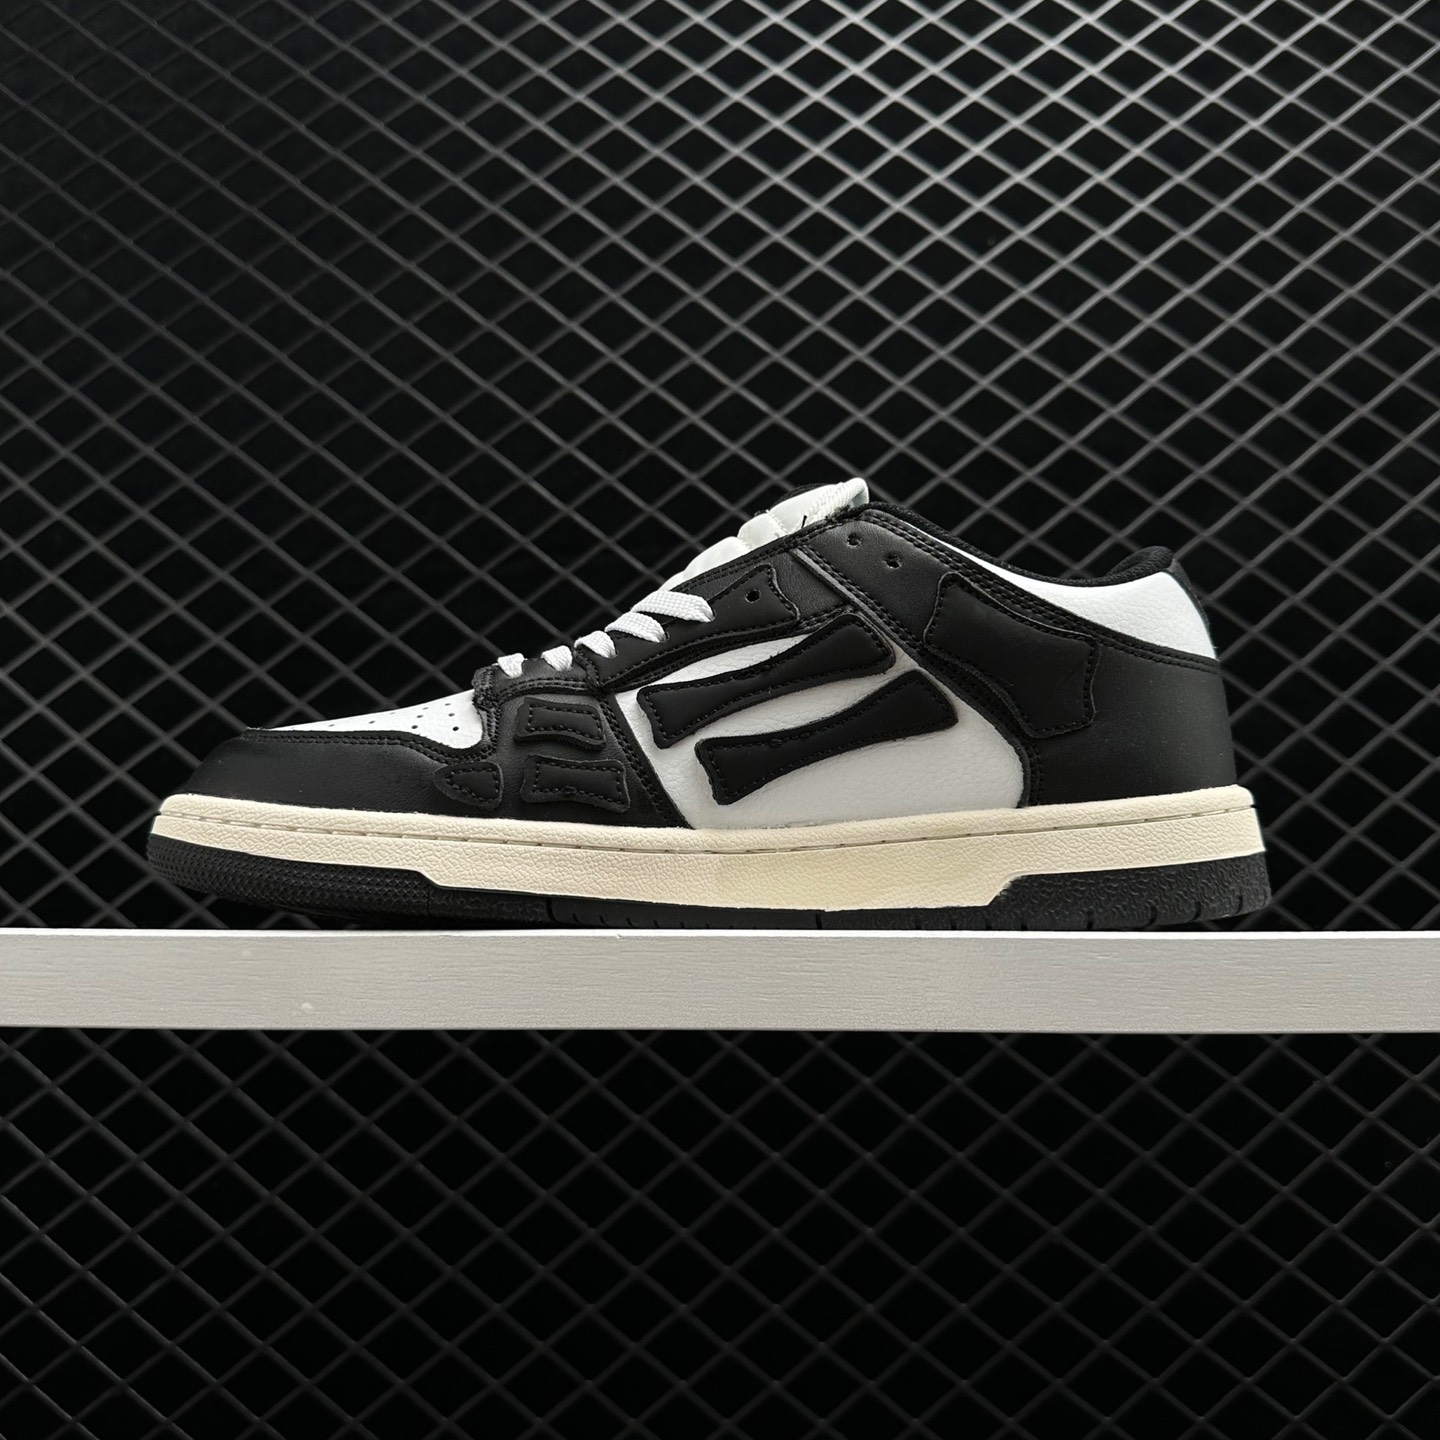 Amiri Skel Top Low 'Black White' PF22MFS003 004: Sleek and Stylish Footwear for Men